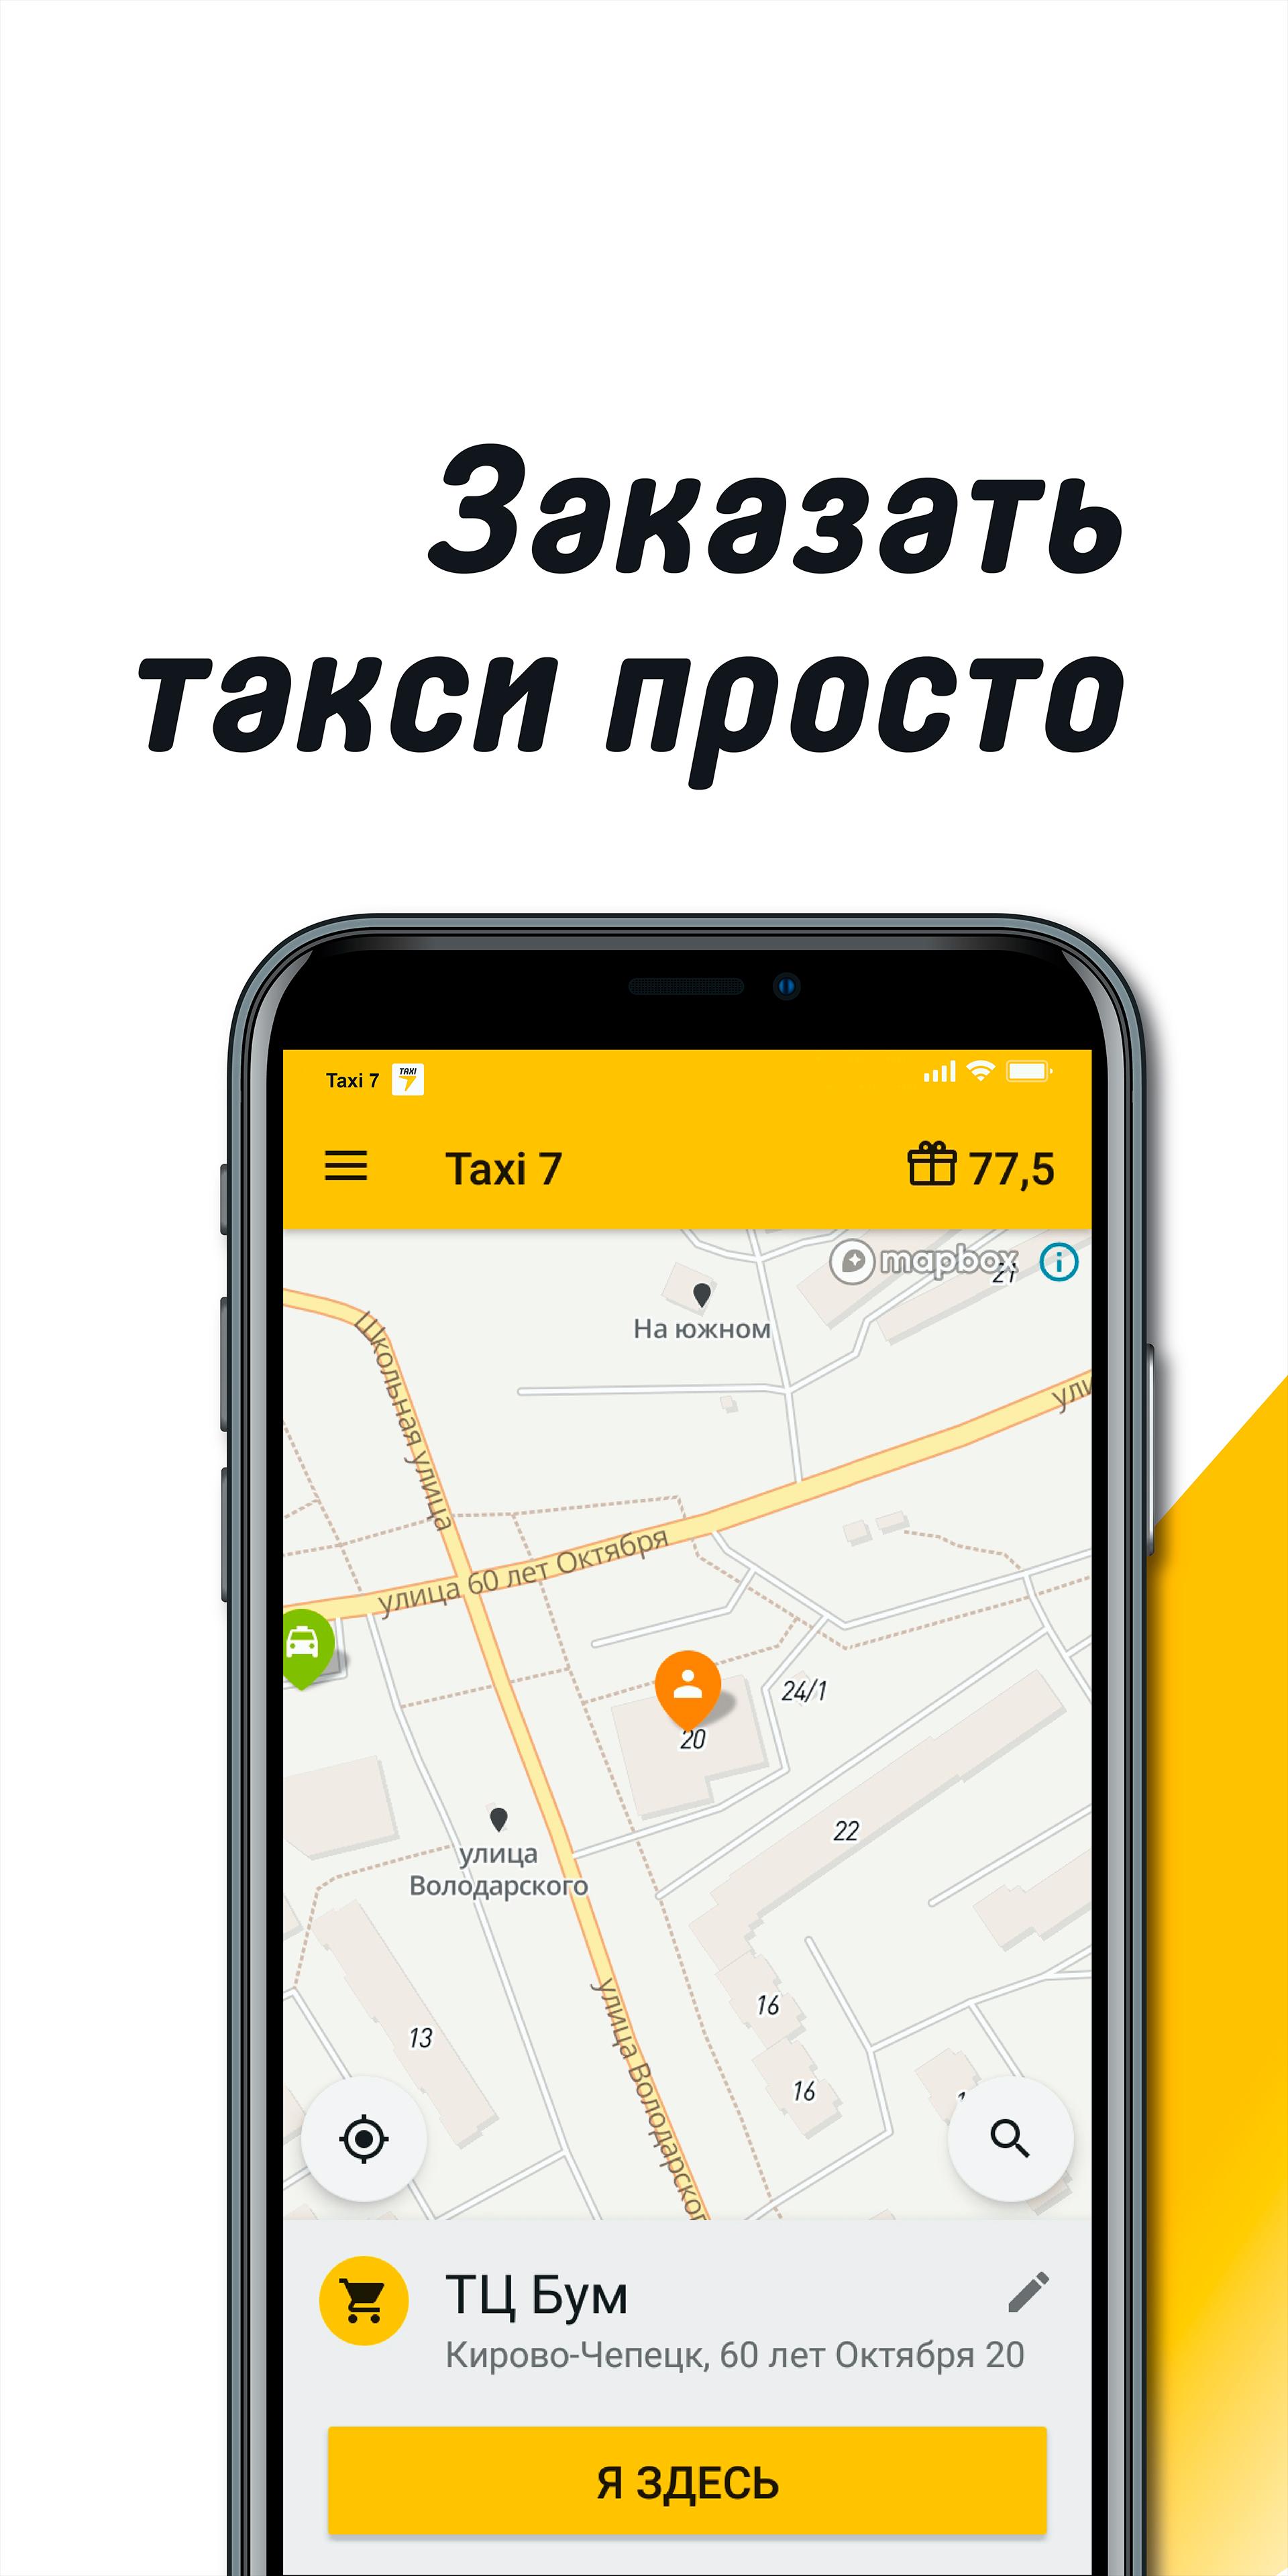 Такси 7 телефон. Приложение такси. Гугл такси. Такси клиентское приложения. Такси 007.